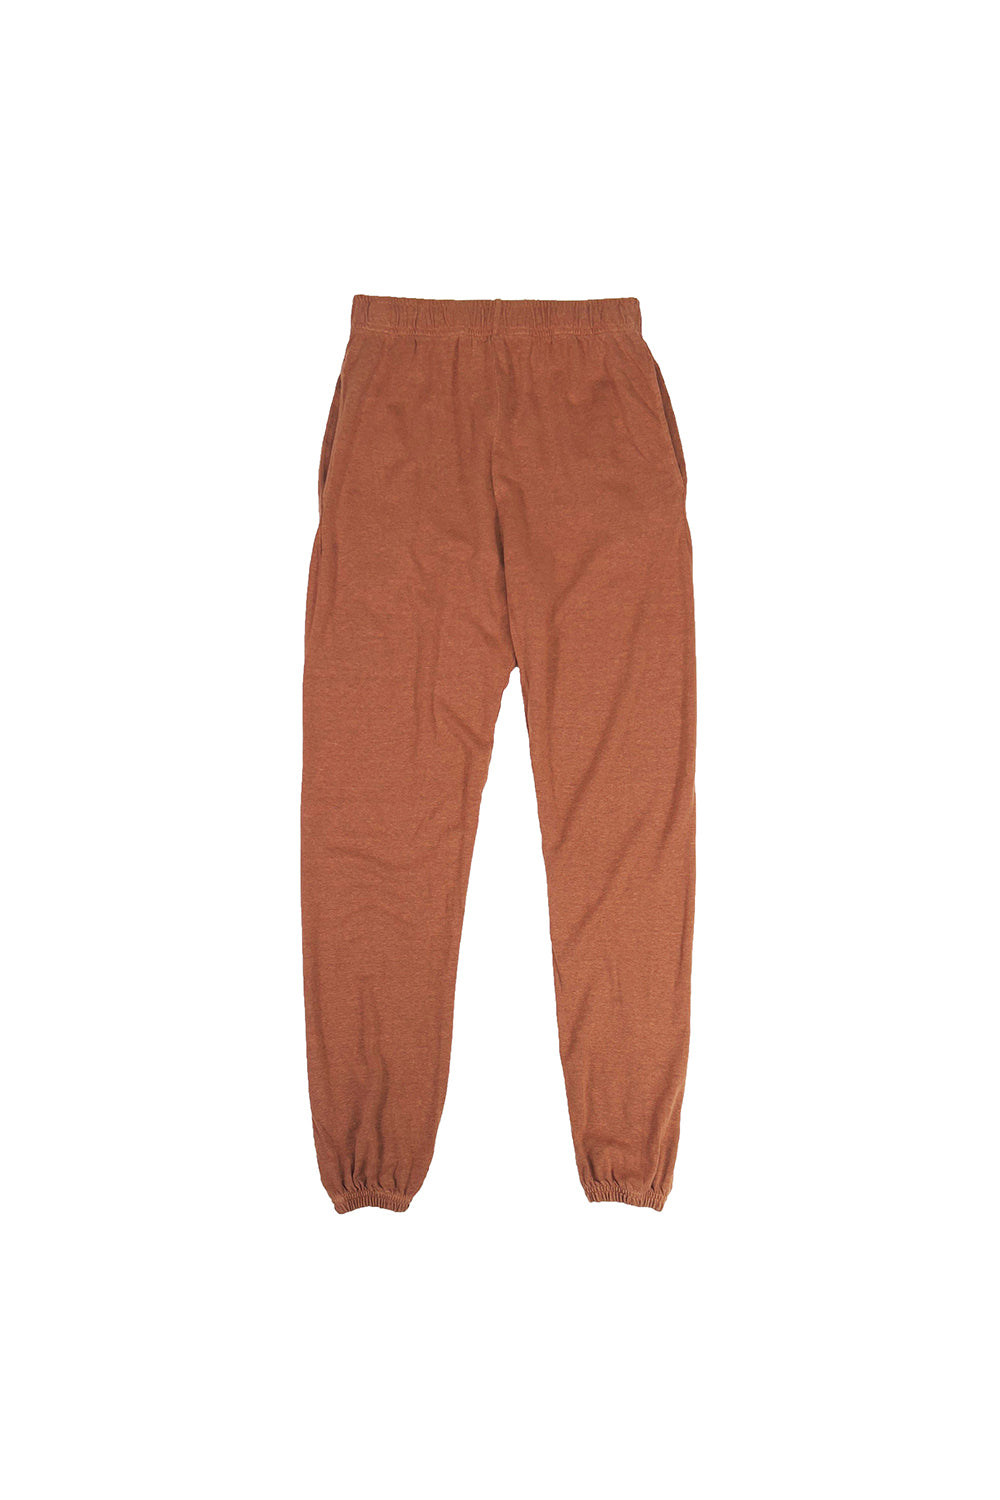 Classic Sweatpants  Jungmaven Hemp Clothing & Accessories